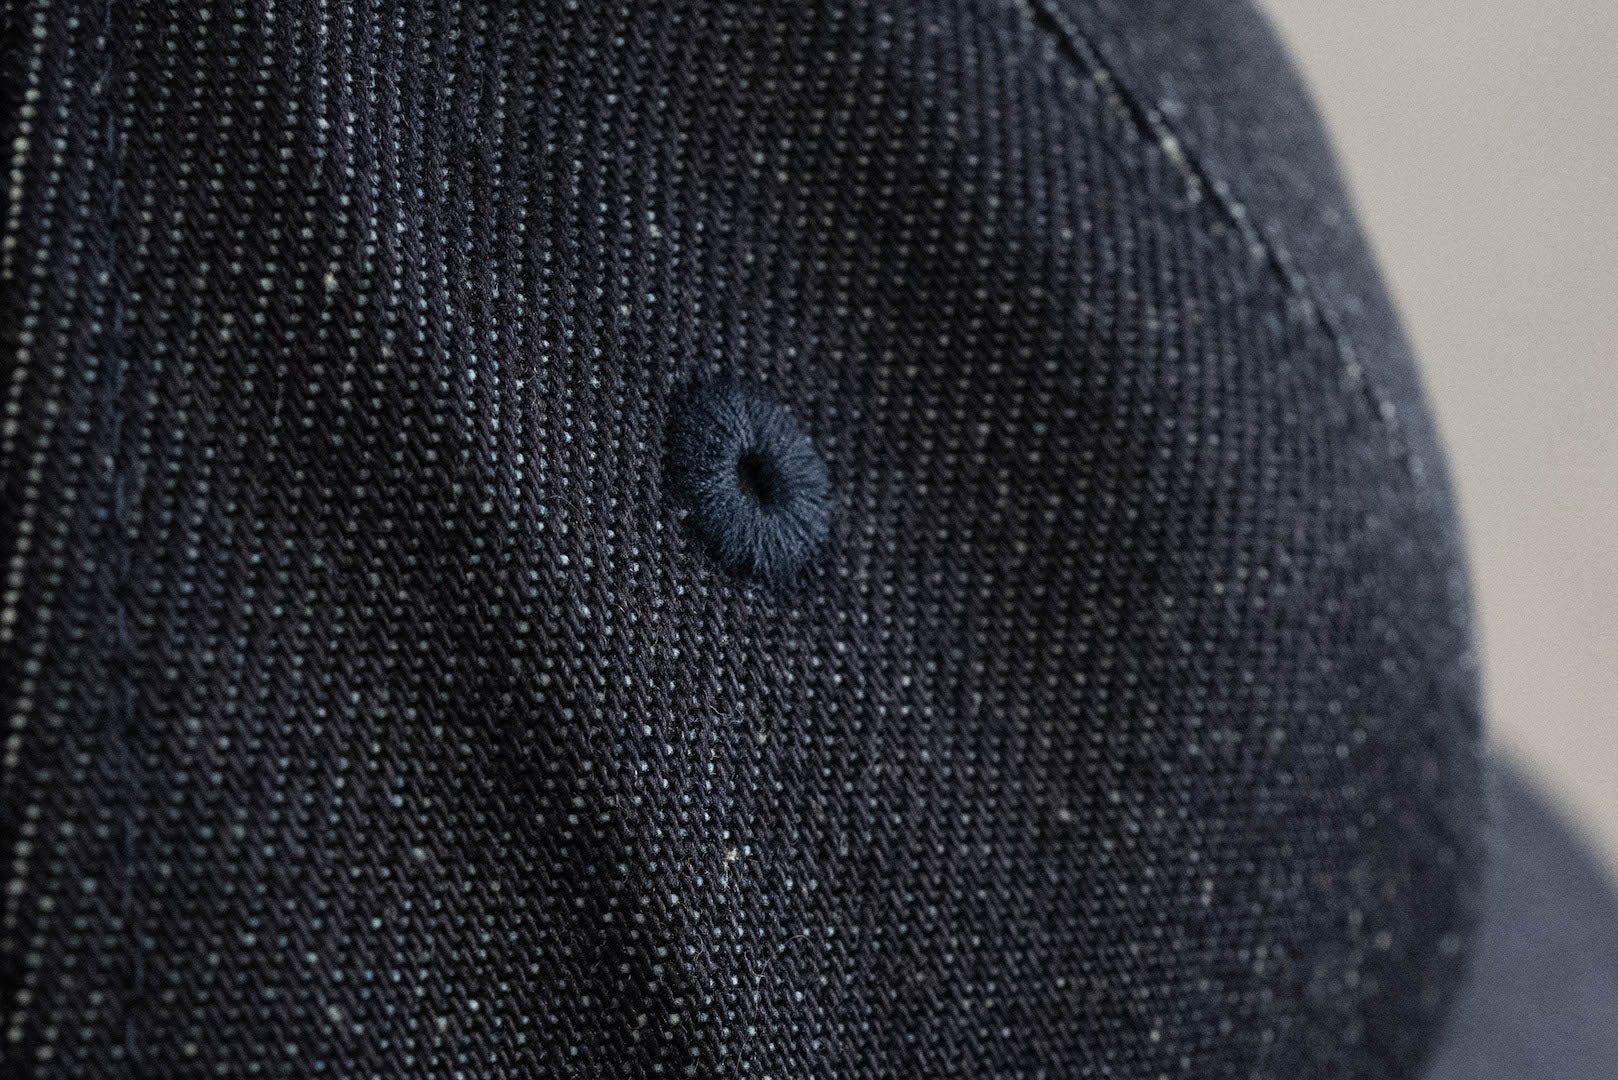 Unique Garment 'Playa' Denim Ball Cap (Indigo)